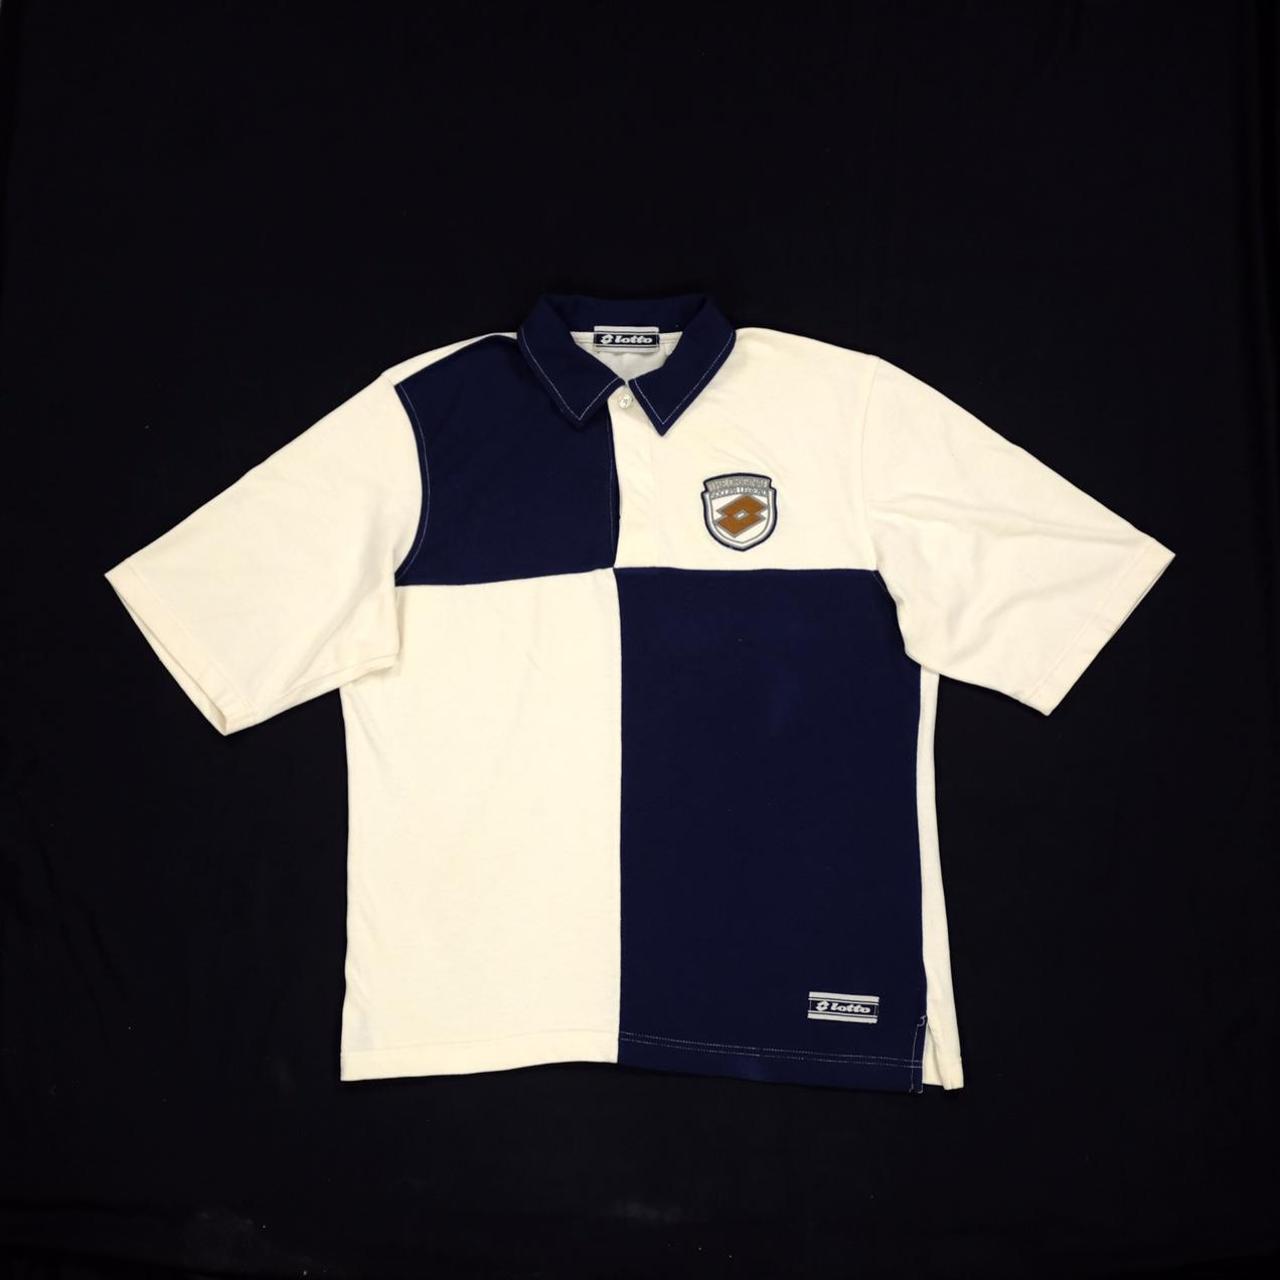 Vintage Lotto polo shirt. Original 90s Lotto Soccer... - Depop